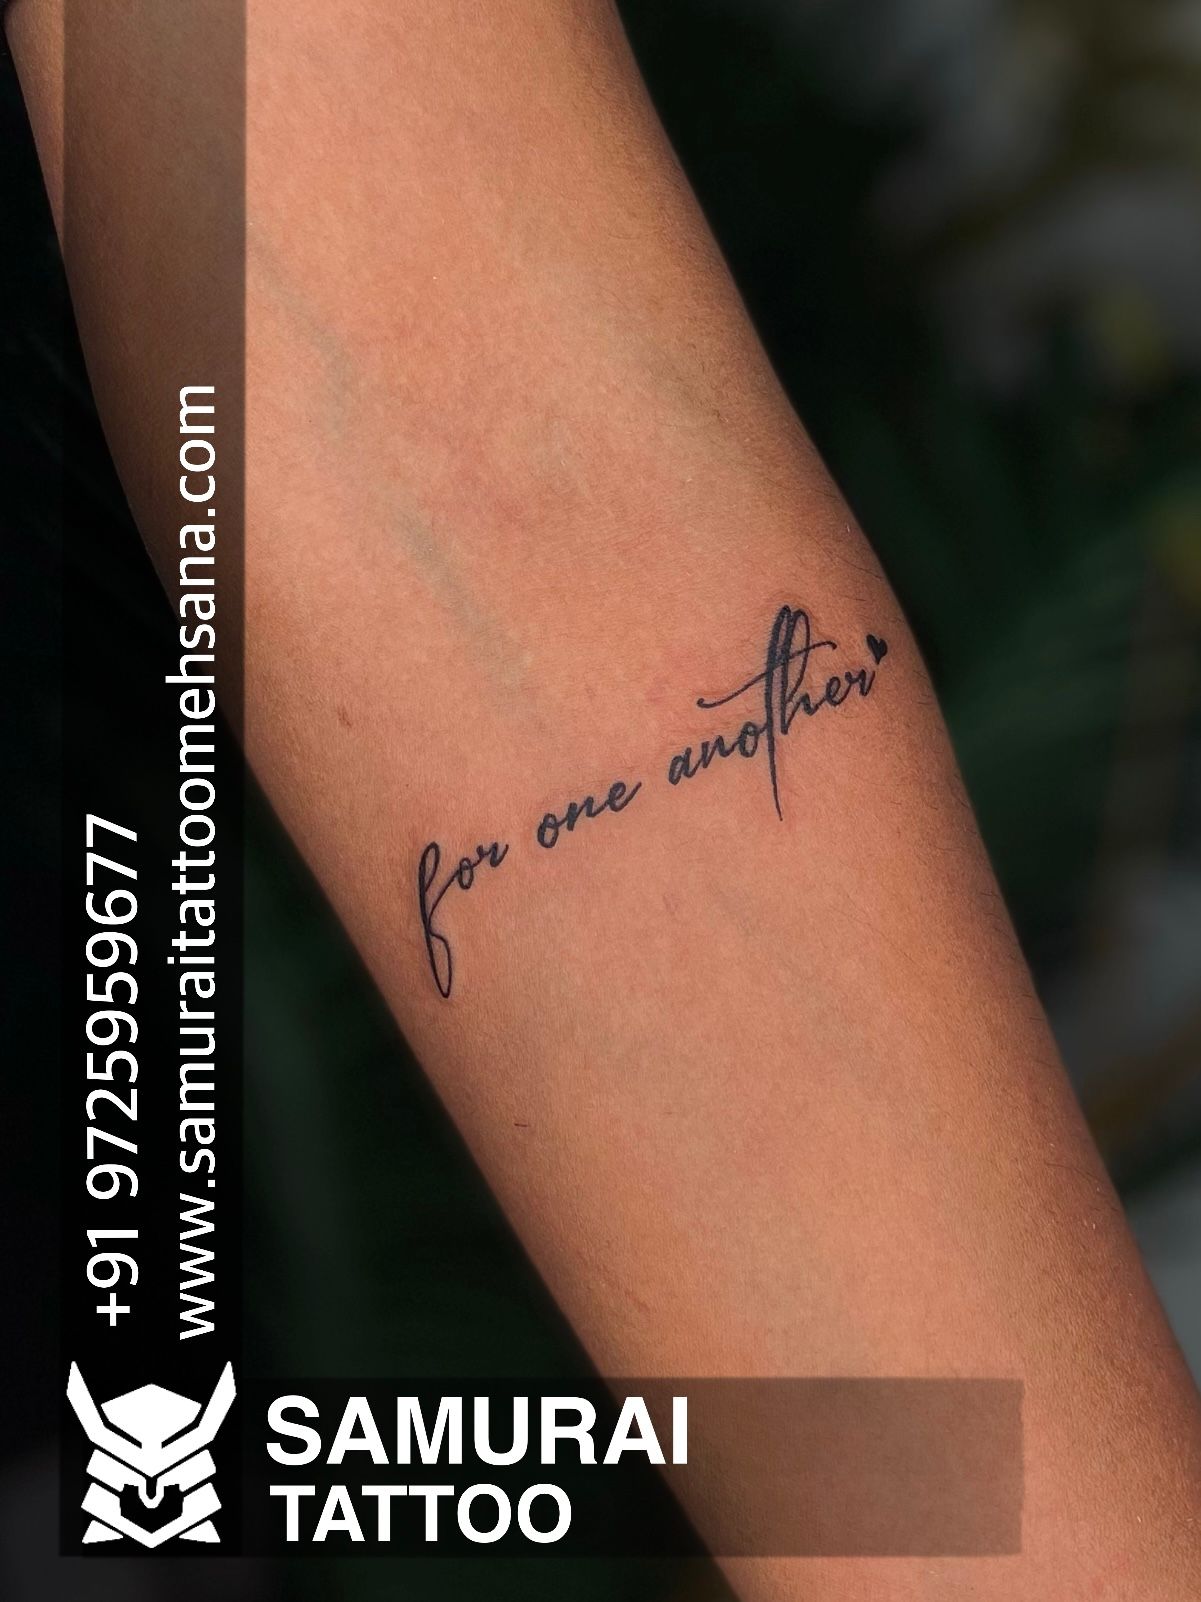 Name Tattoo | Instagram